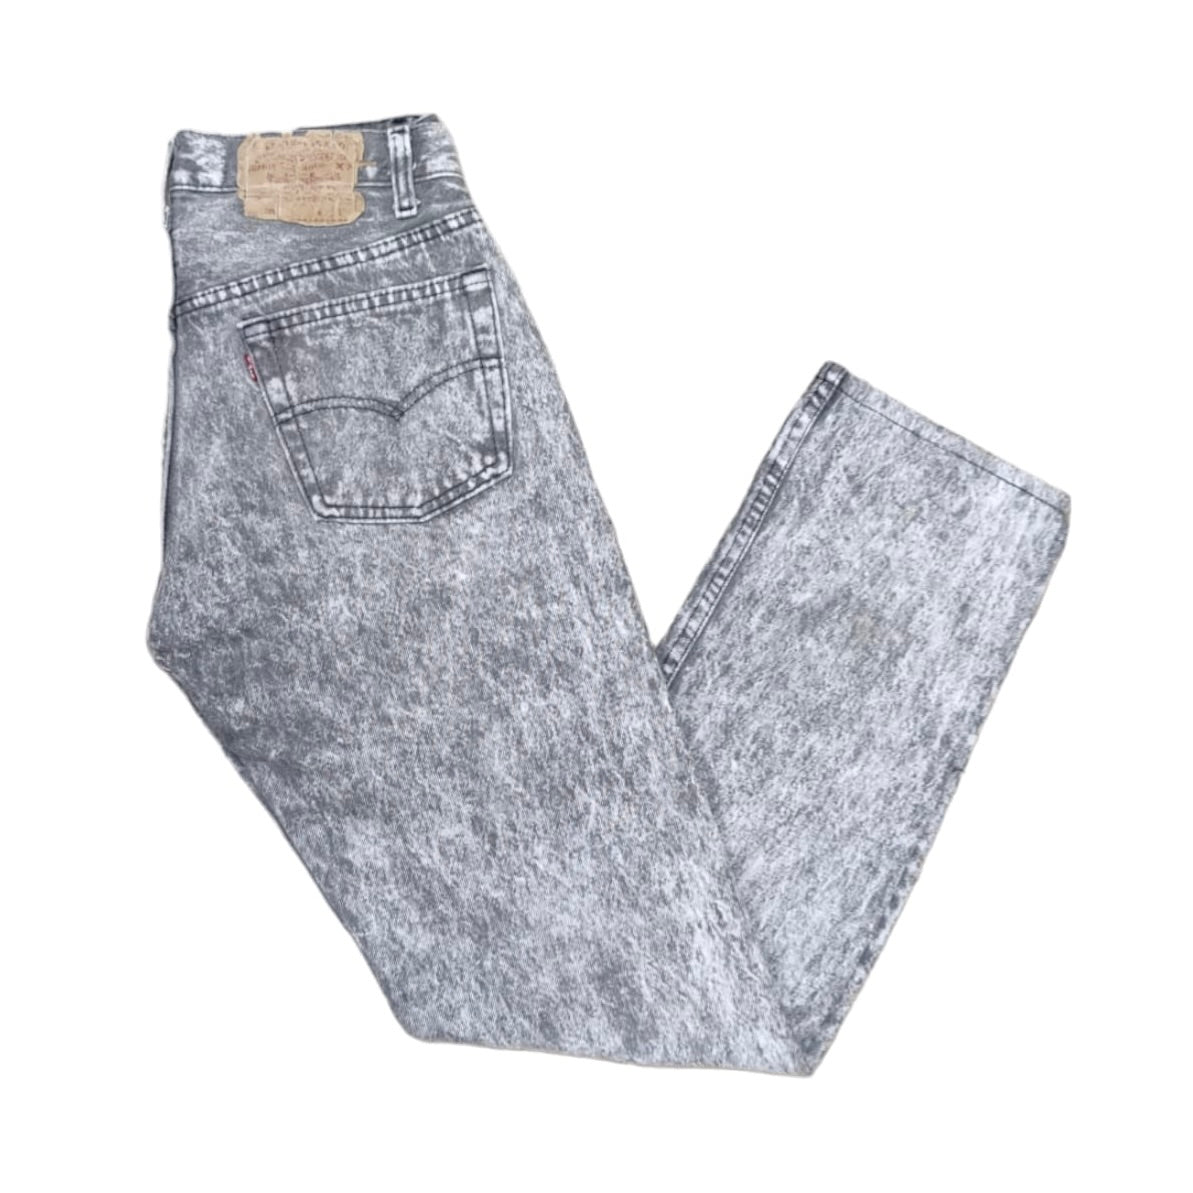 Vintage Levis 501 Grey/White Jeans (W29/L32)